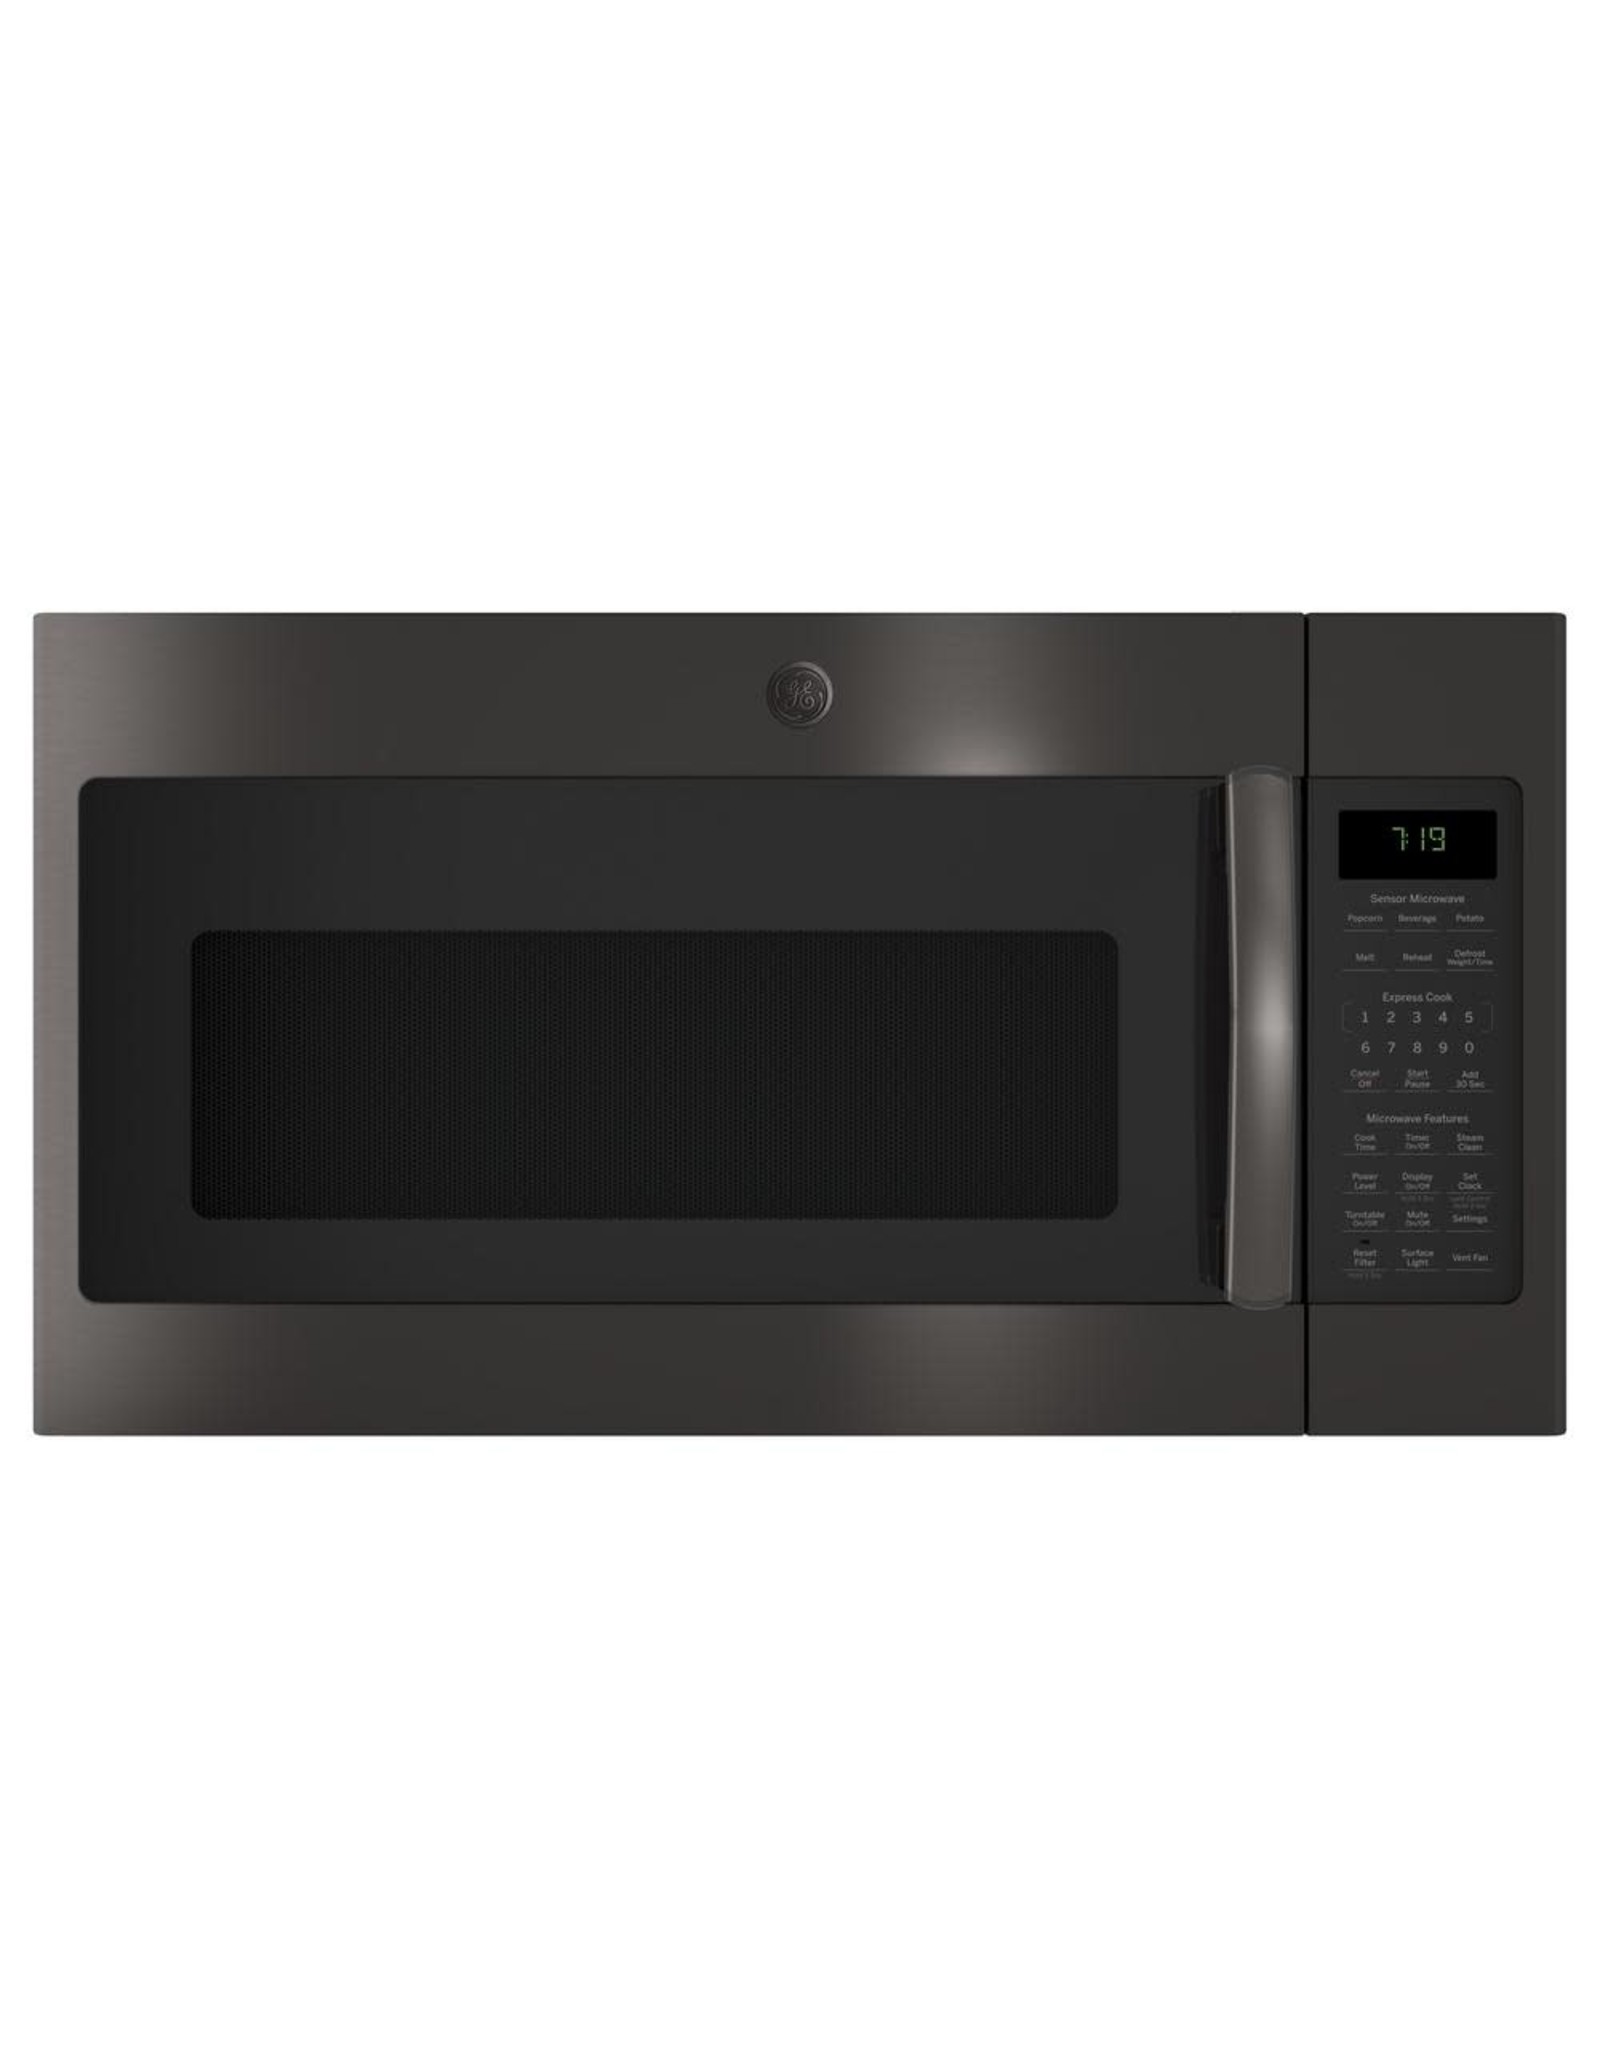 JVM7195BLTS  1.9 cu. ft. Over the Range Microwave in Black Stainless Steel with Sensor Cooking, Fingerprint Resistant